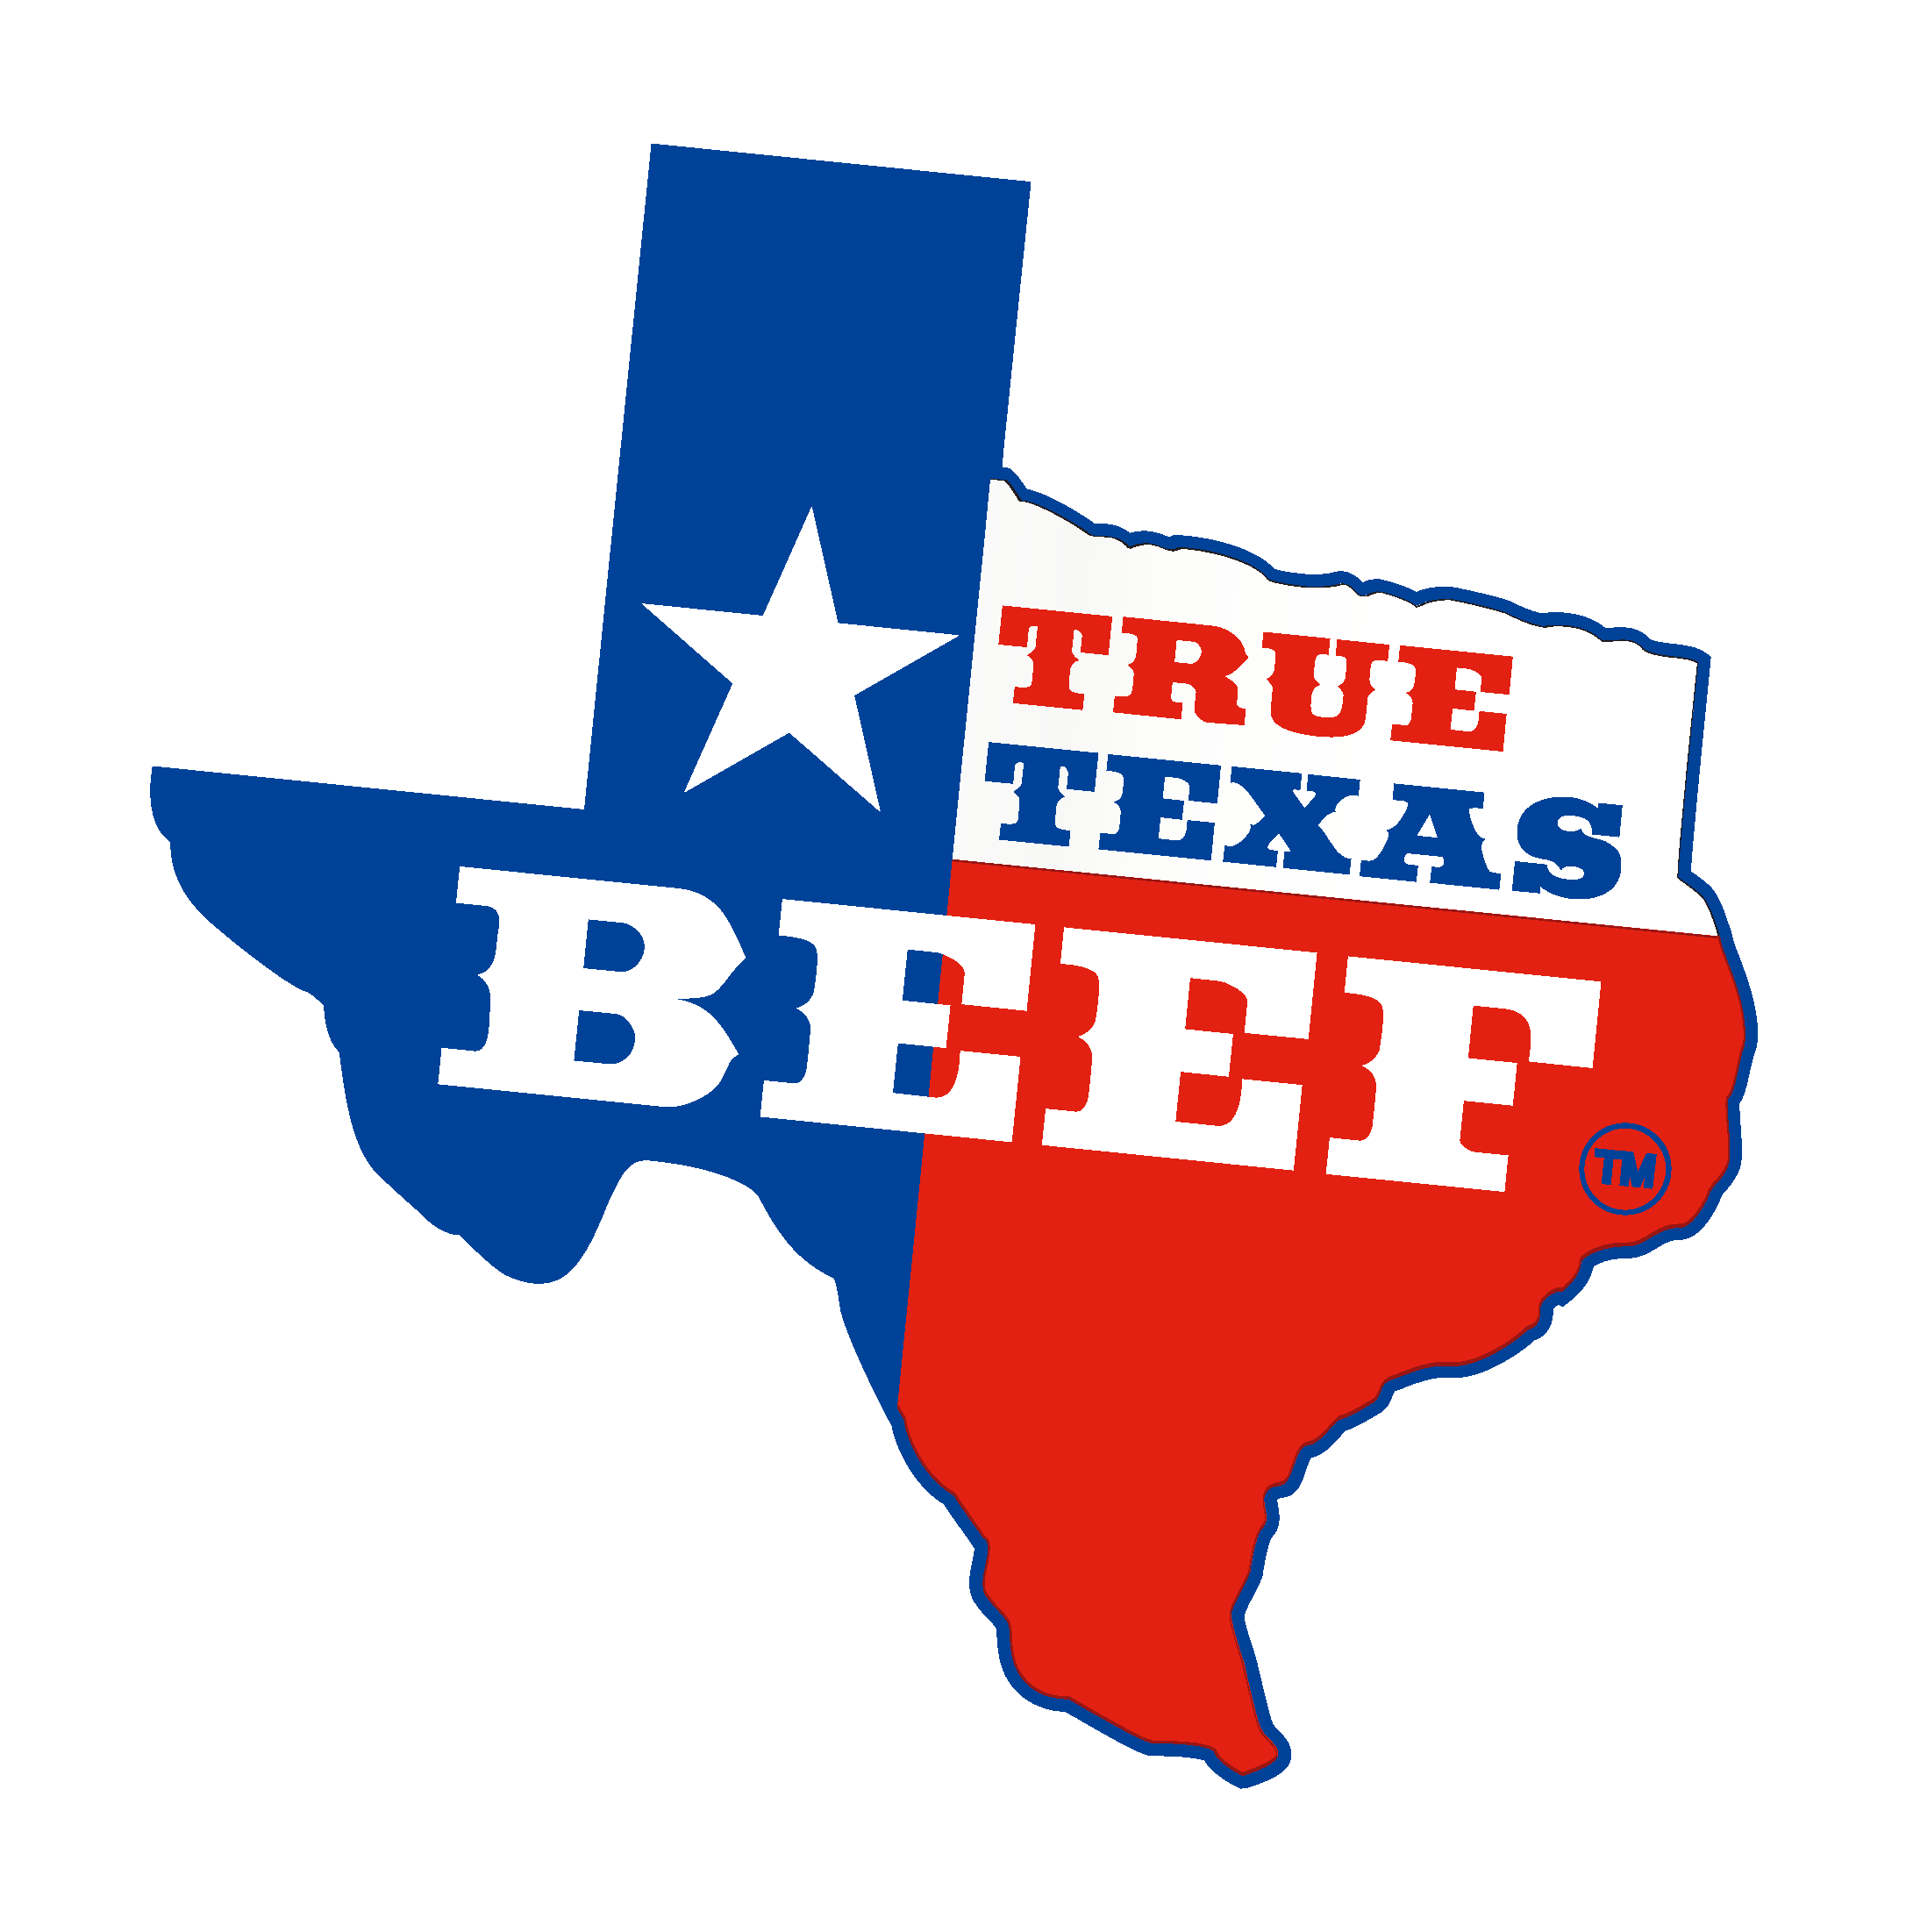 True Texas Beef Logo Vector